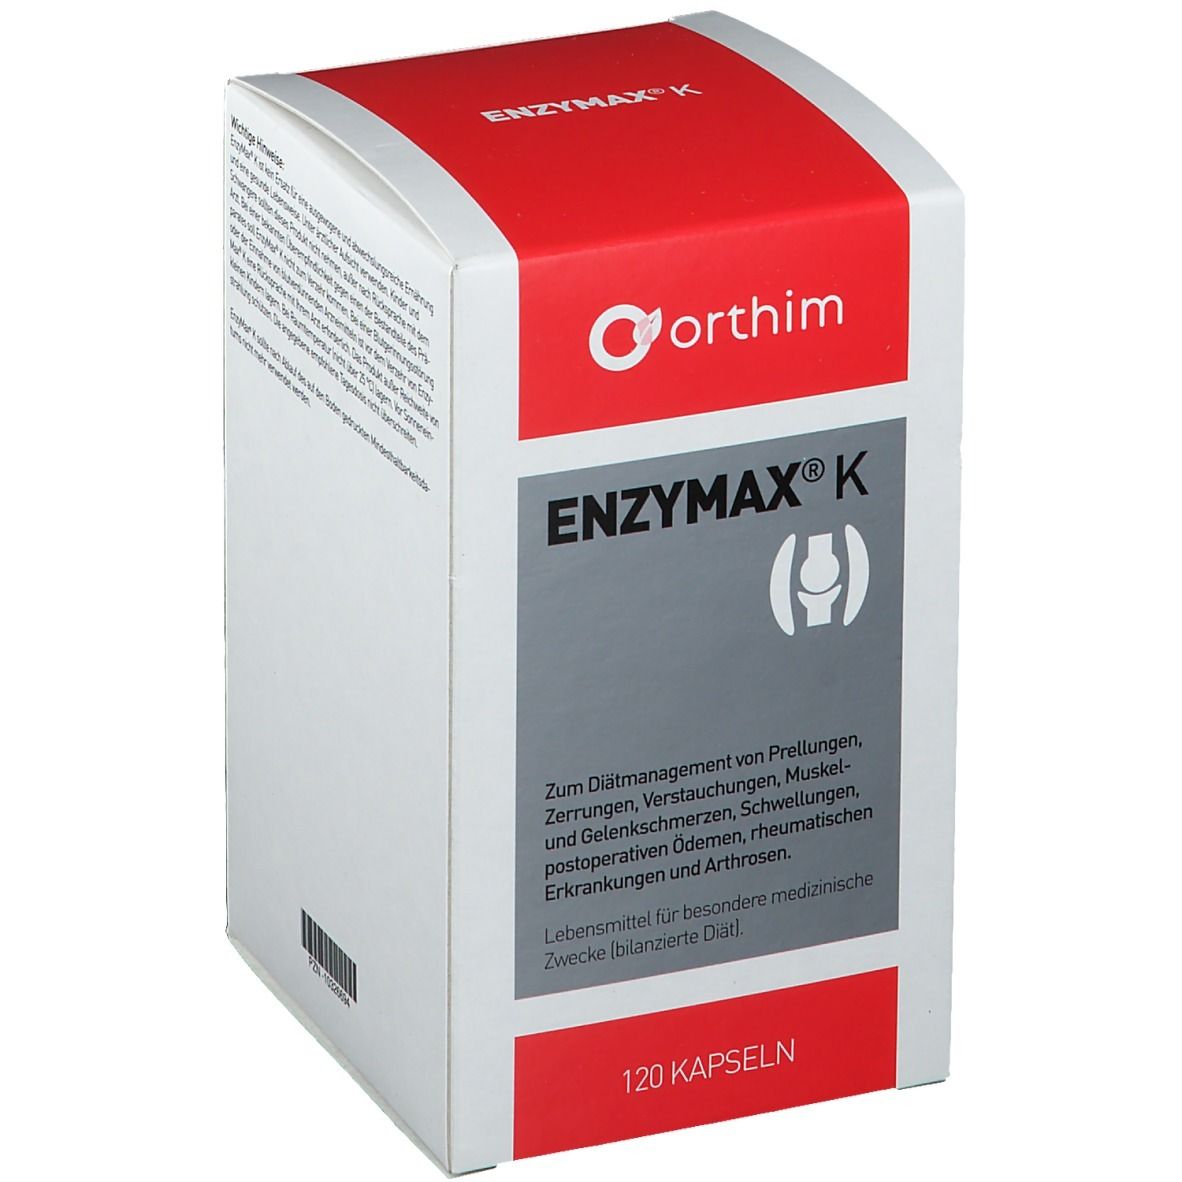 Enzymax® K